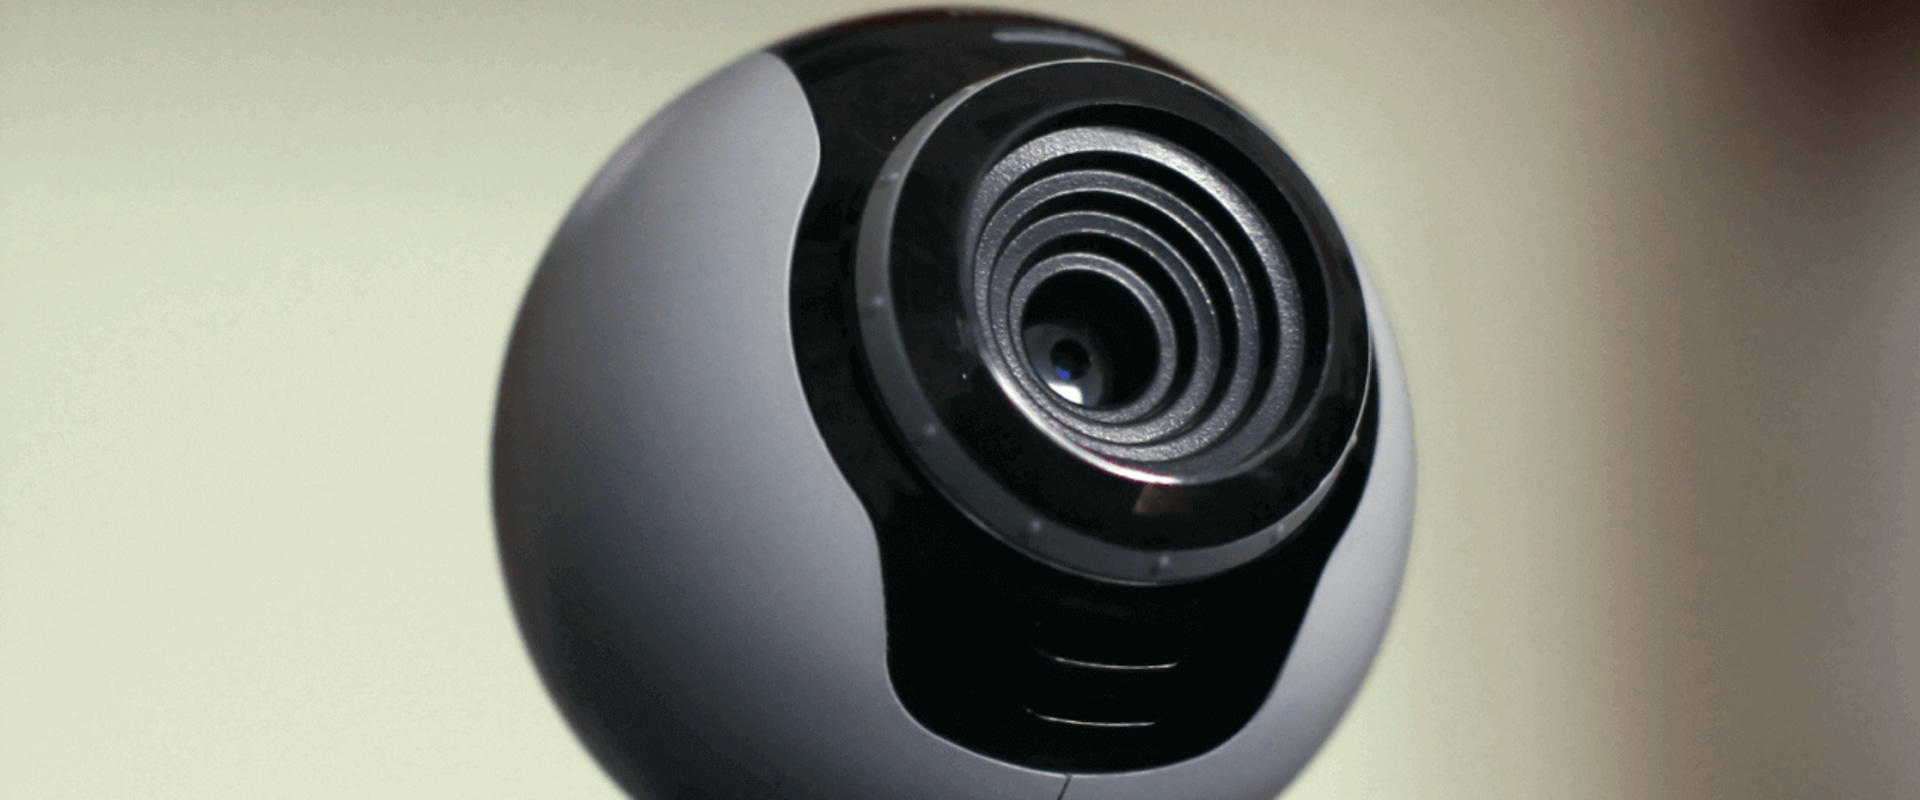 Desktop Webcams: A Comprehensive Overview